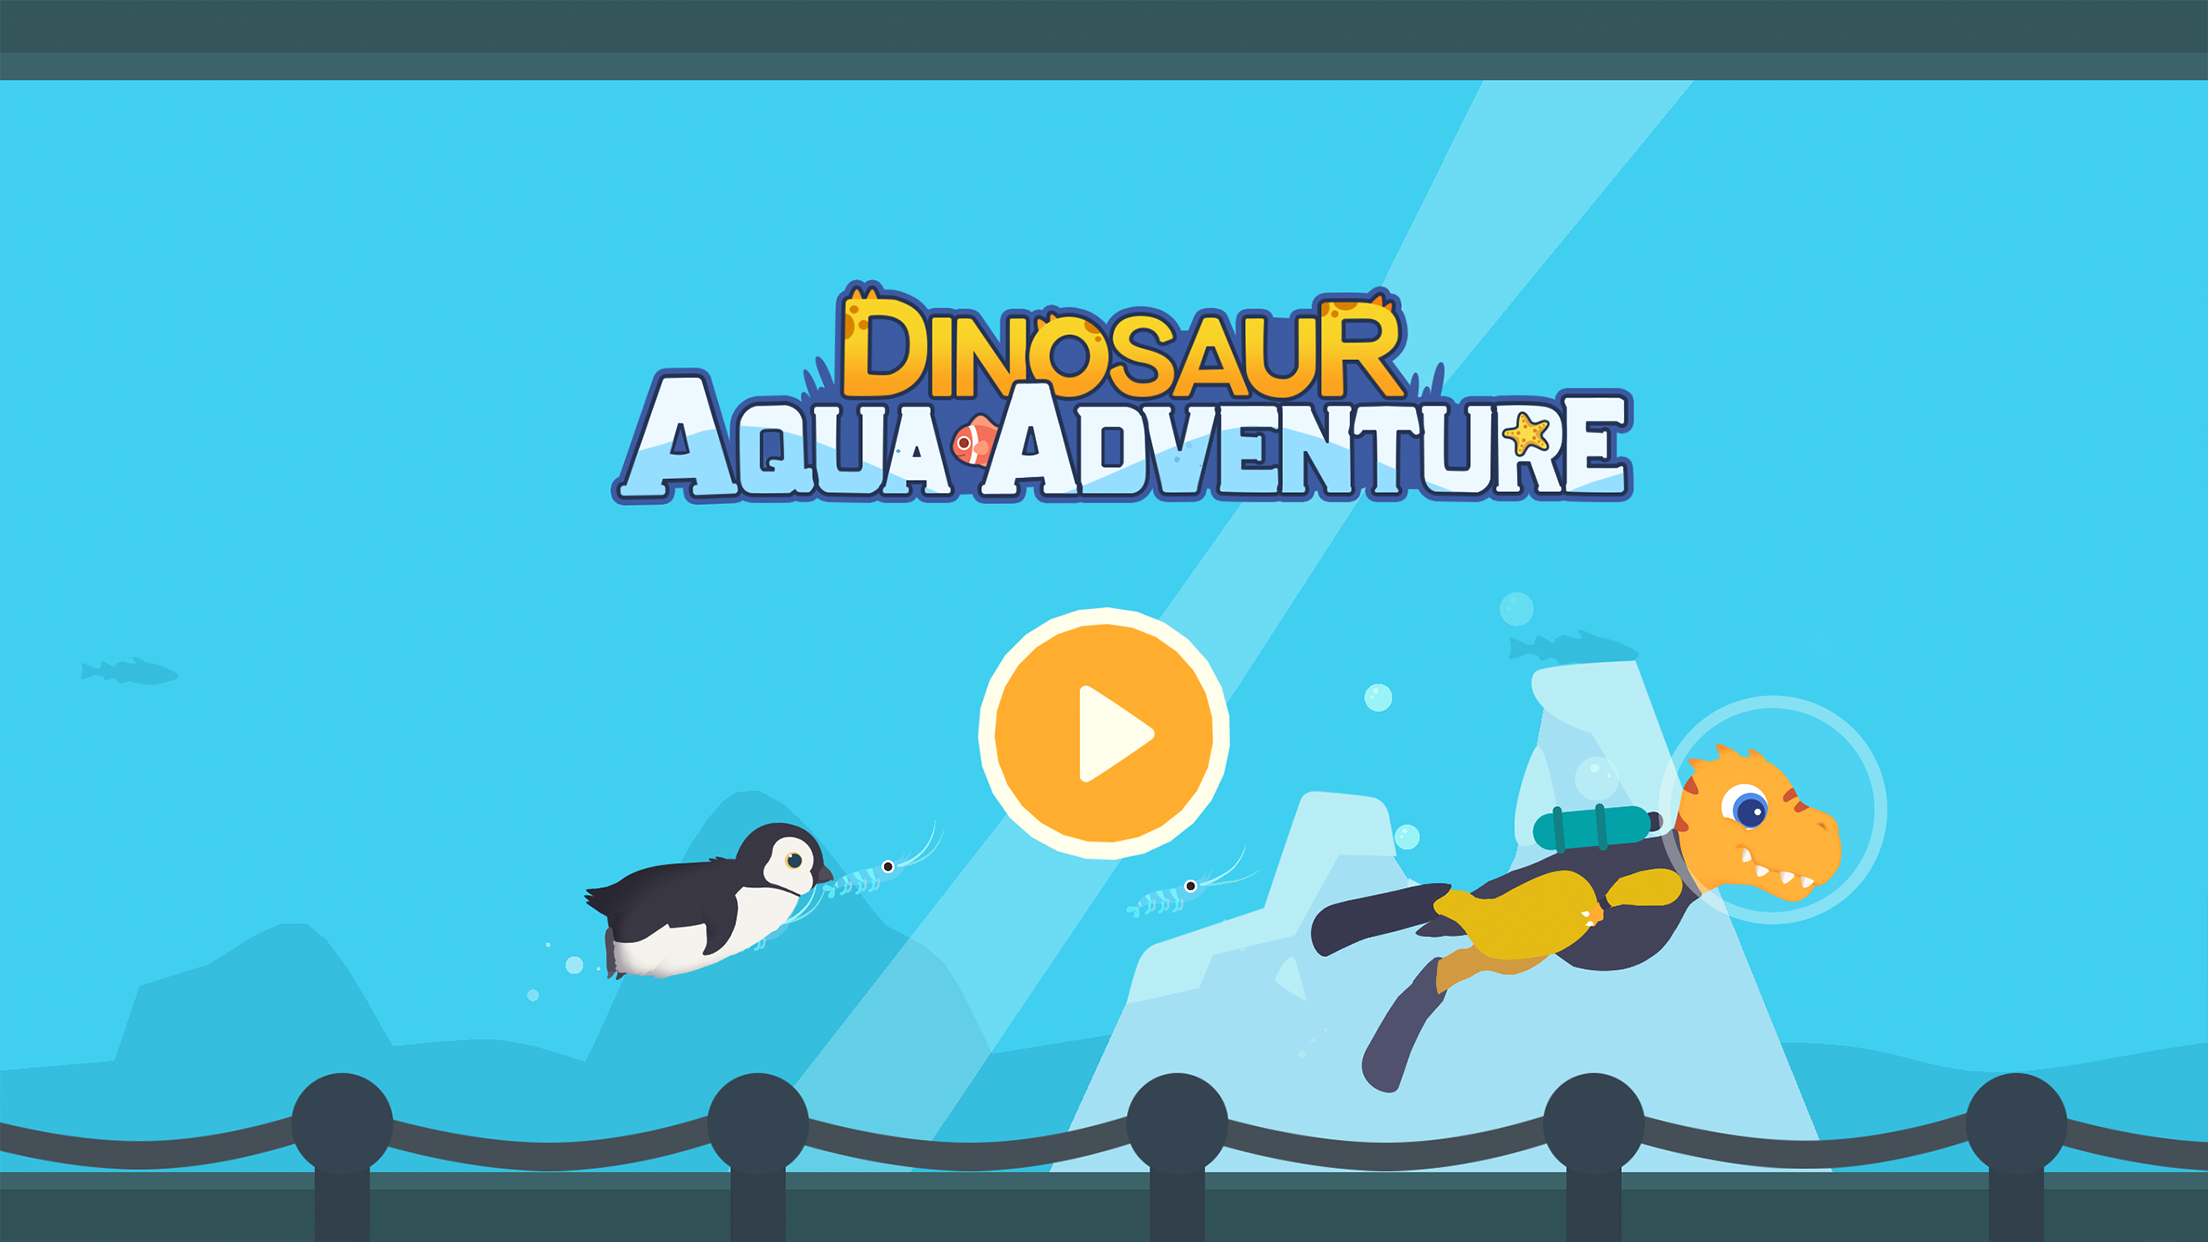 Screenshot 1 of Dinosaure  Aventure  Aquatique 1.1.4